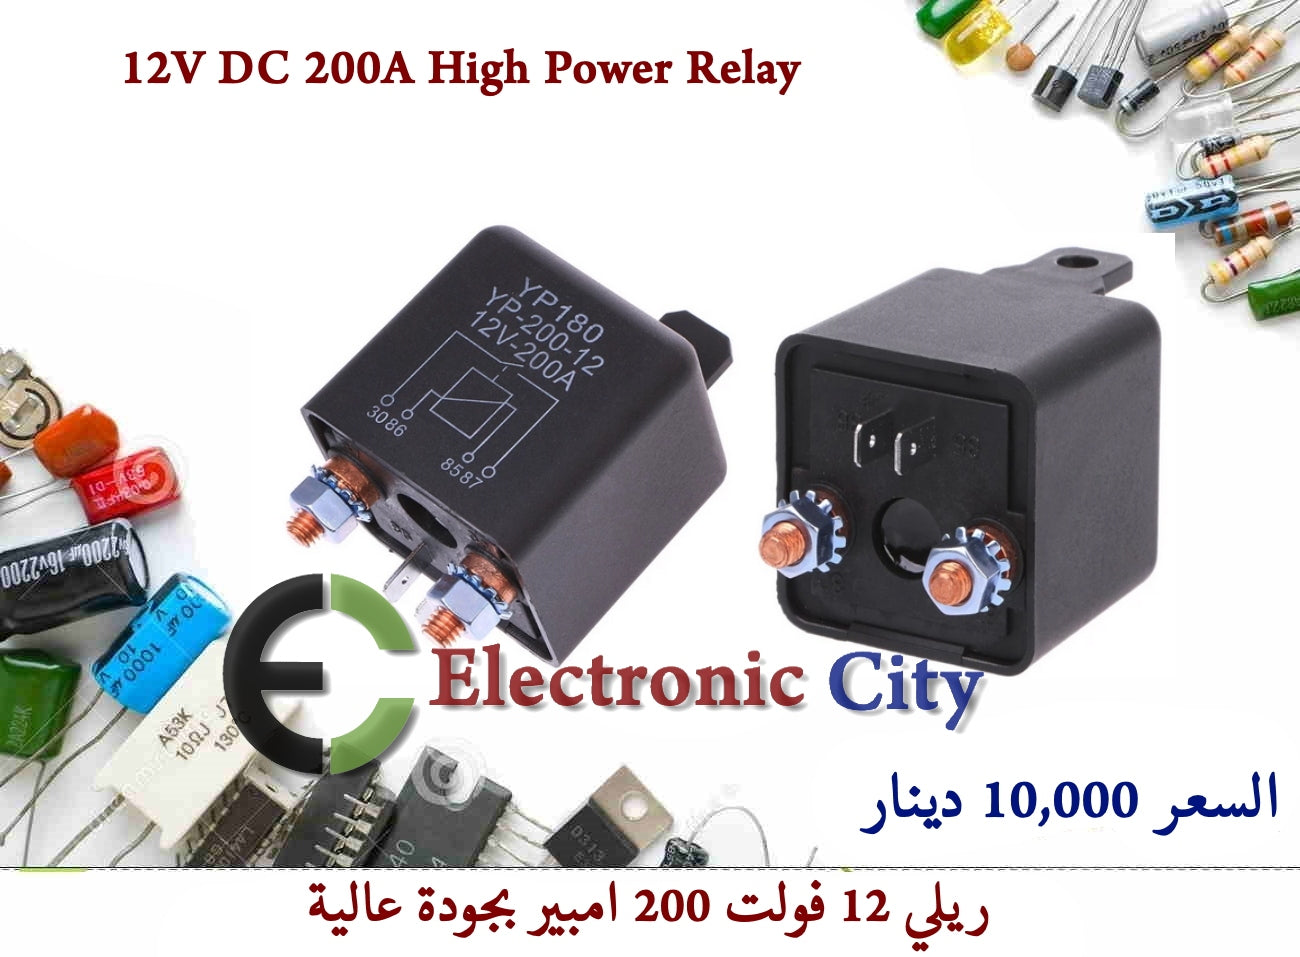 12V DC 200A High Power Relay